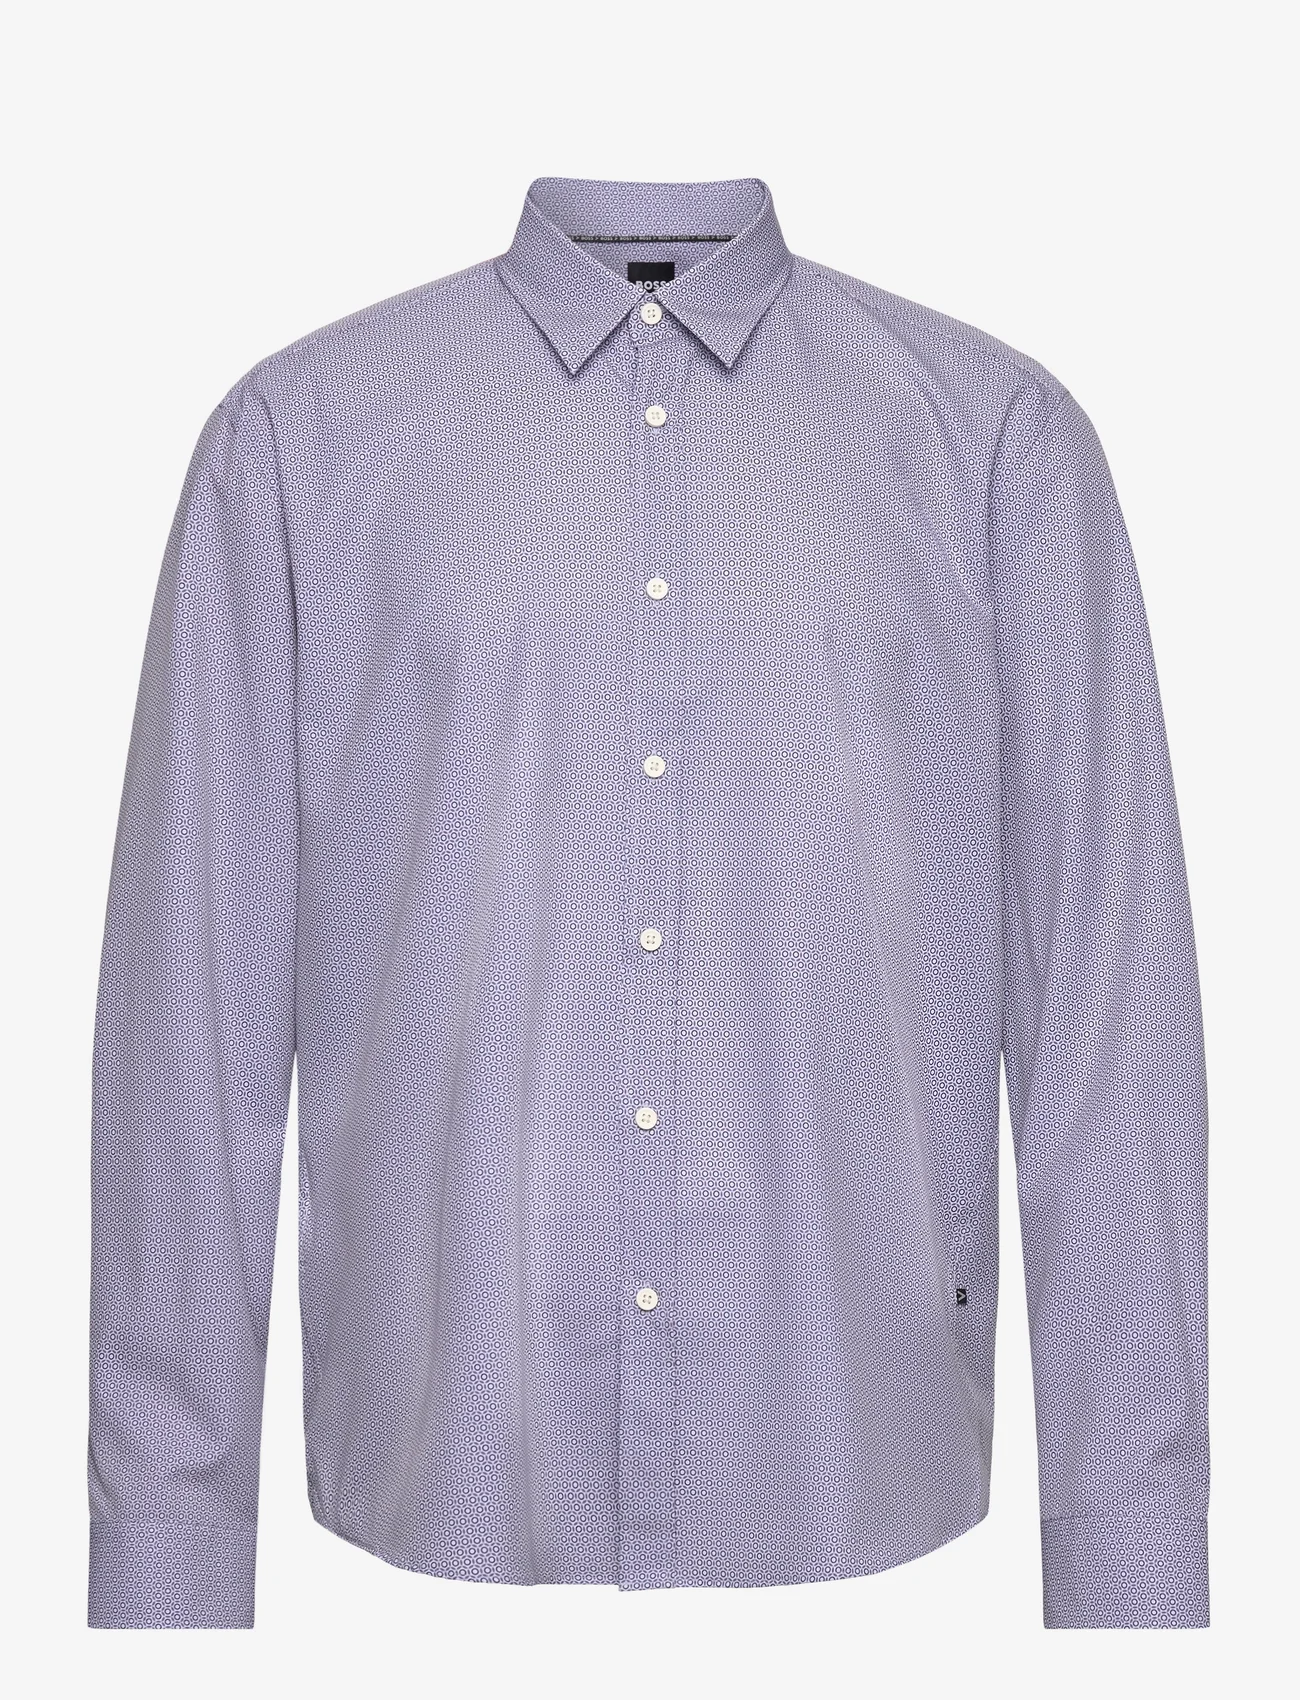 BOSS - P-LIAM-kent-C1-234 - business shirts - medium purple - 0